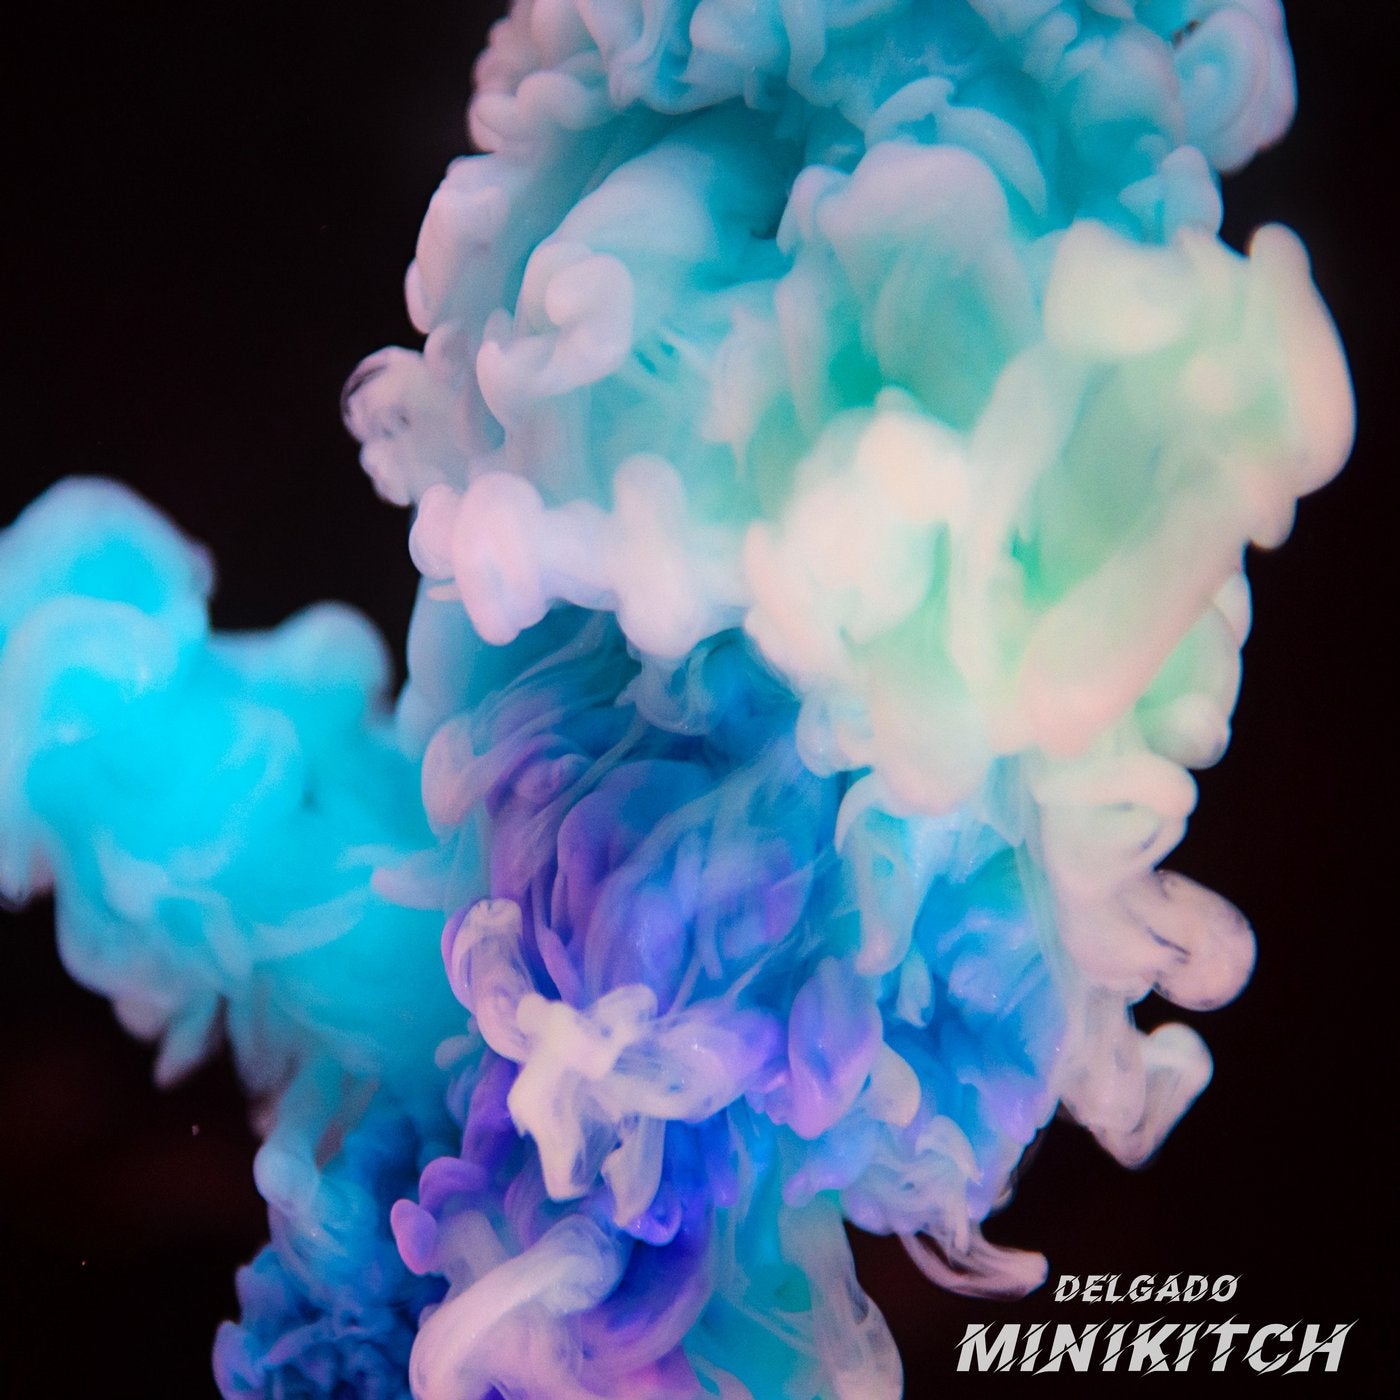 Minikitch